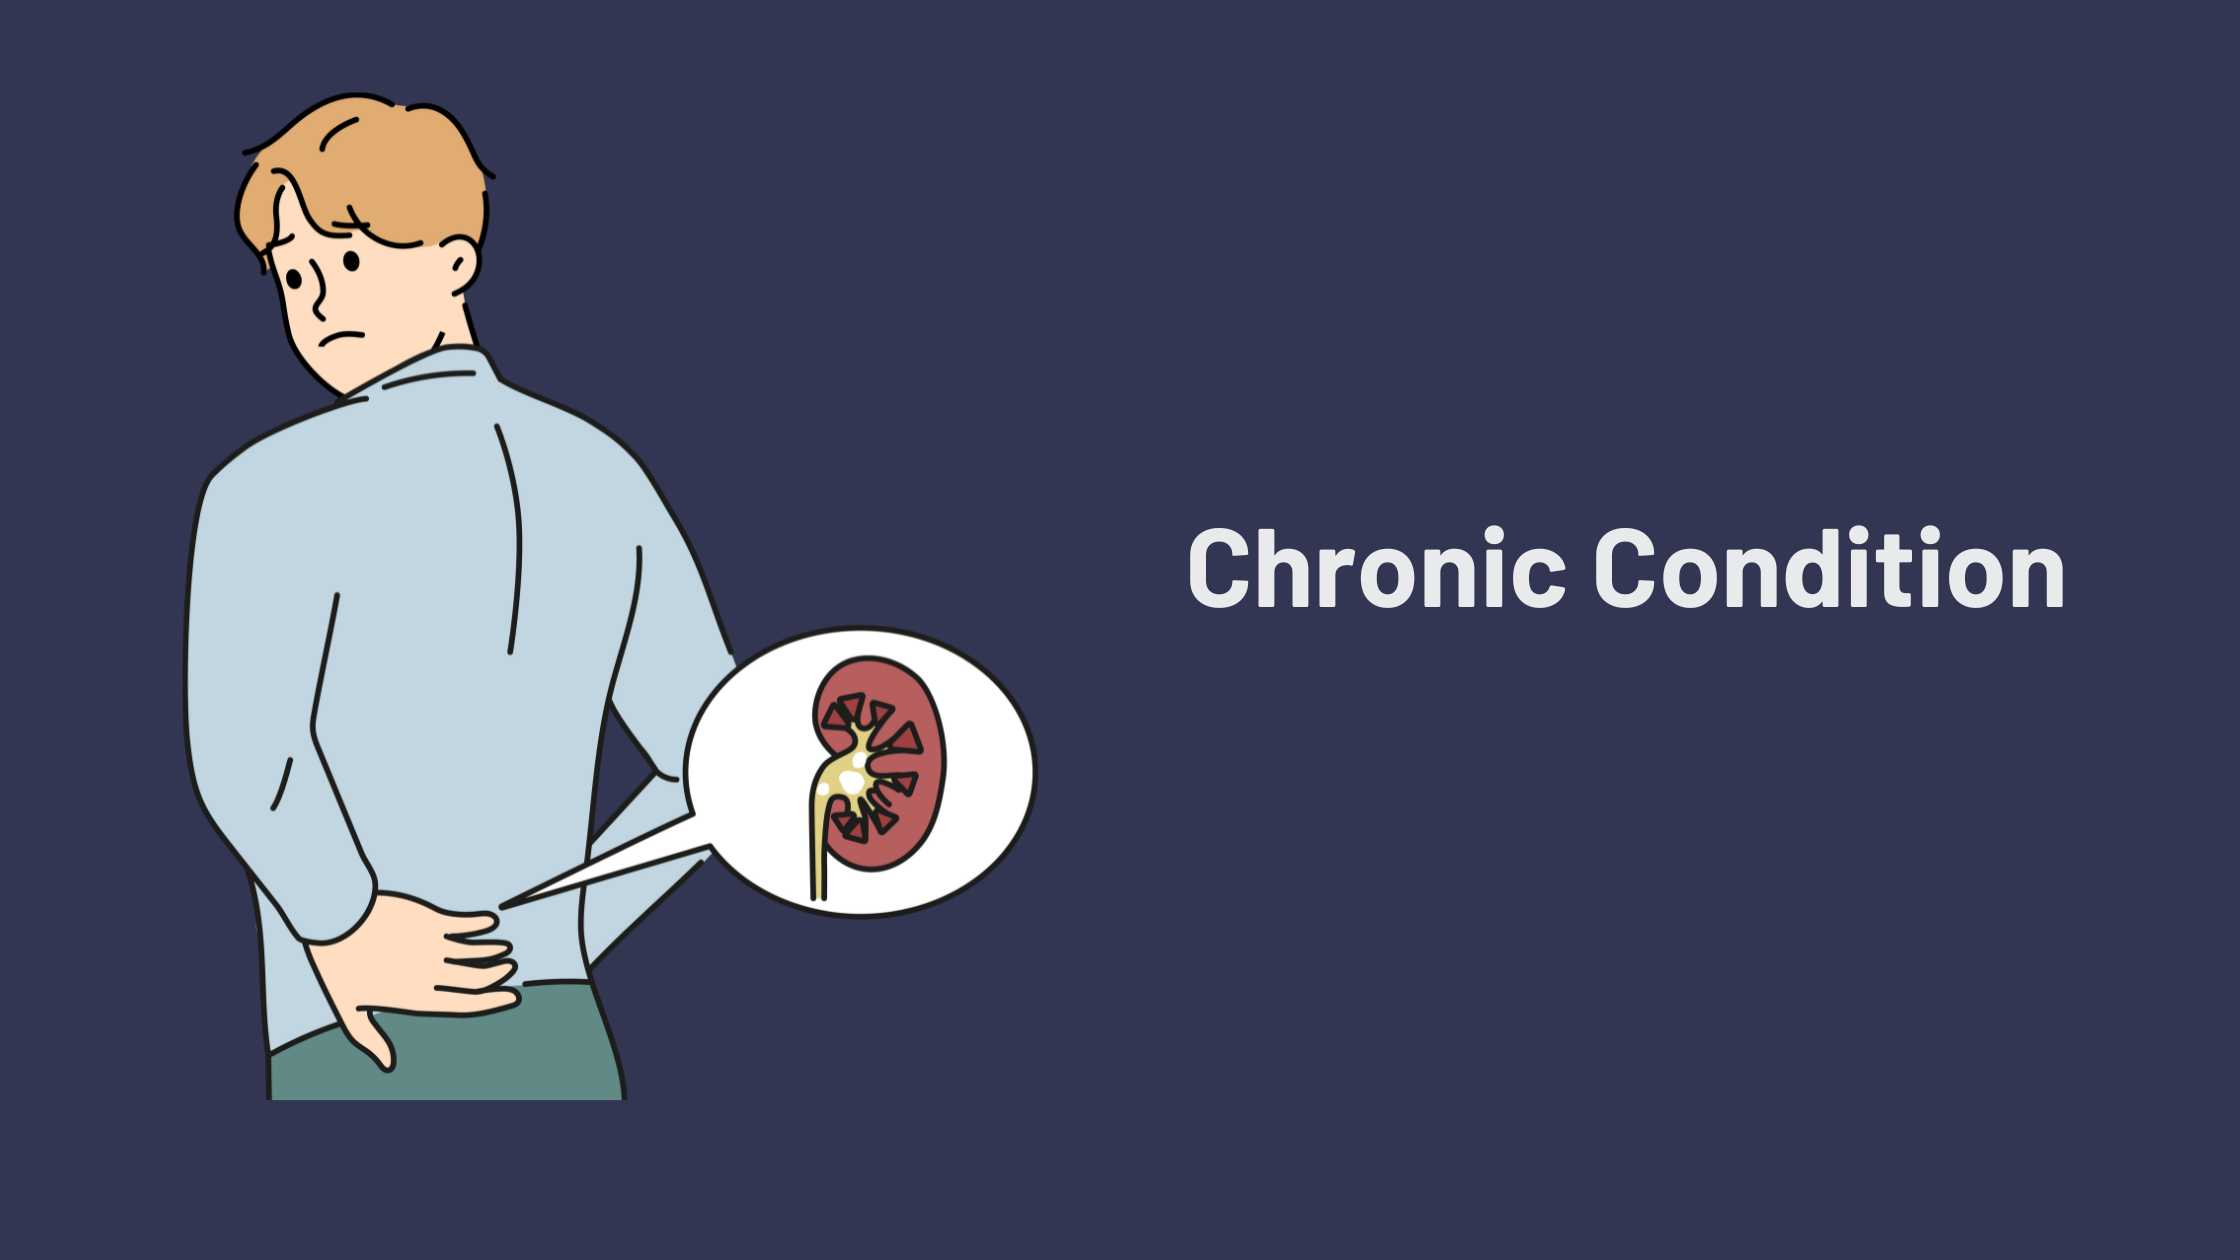 Chronic Condition